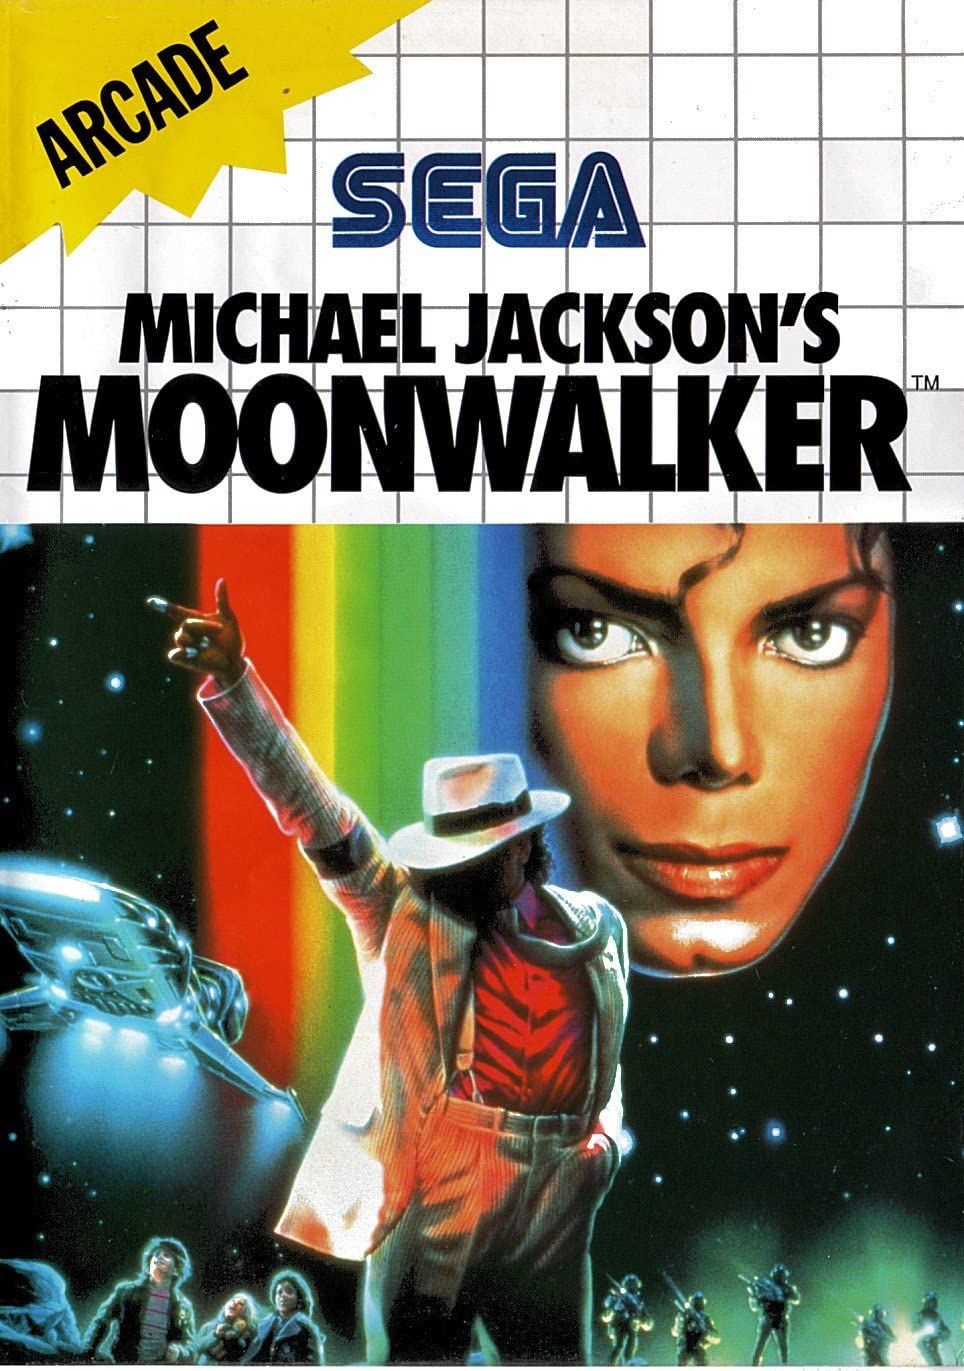 Michael jackson moonwalker